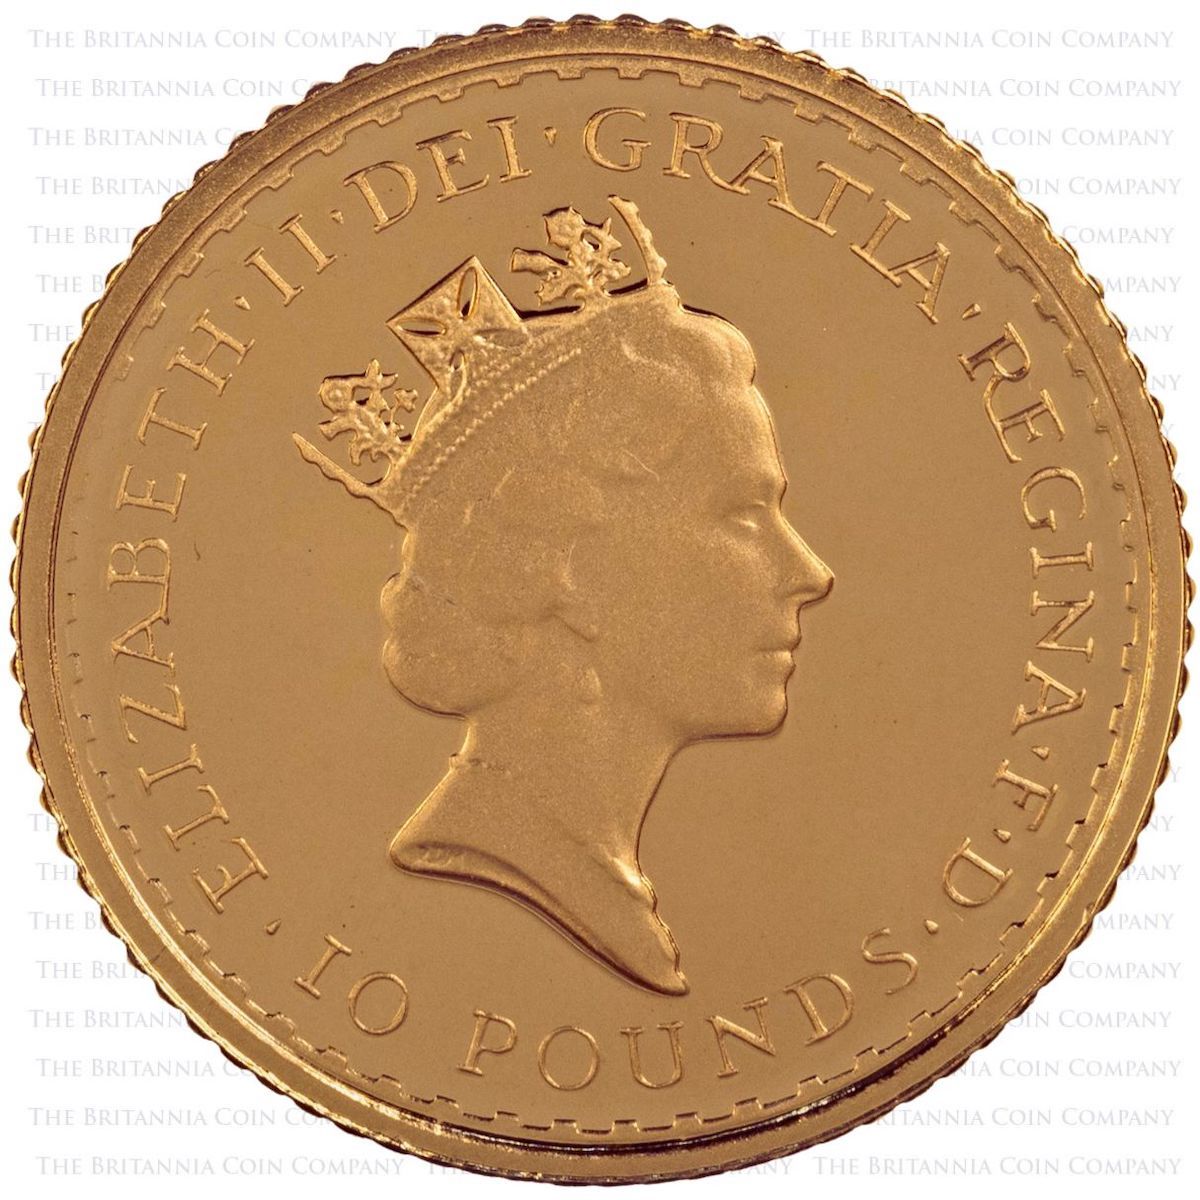 2002 Britannia Tenth Ounce Gold Proof Coin Error Portrait Mule Obverse